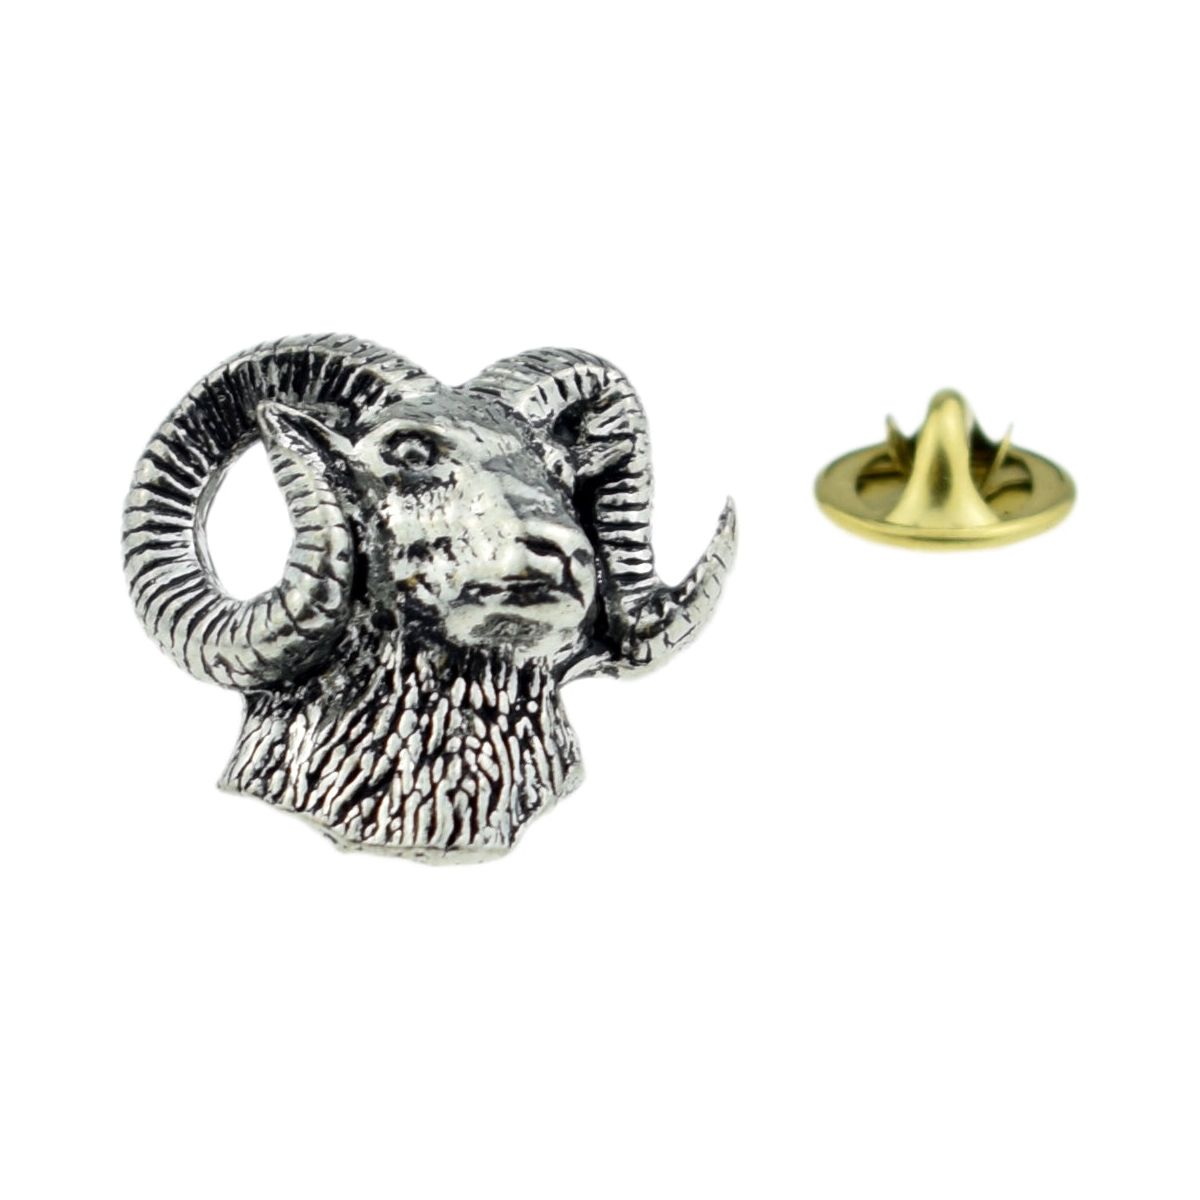 Mouflon Ram Pewter Lapel Pin Badge - Ashton and Finch